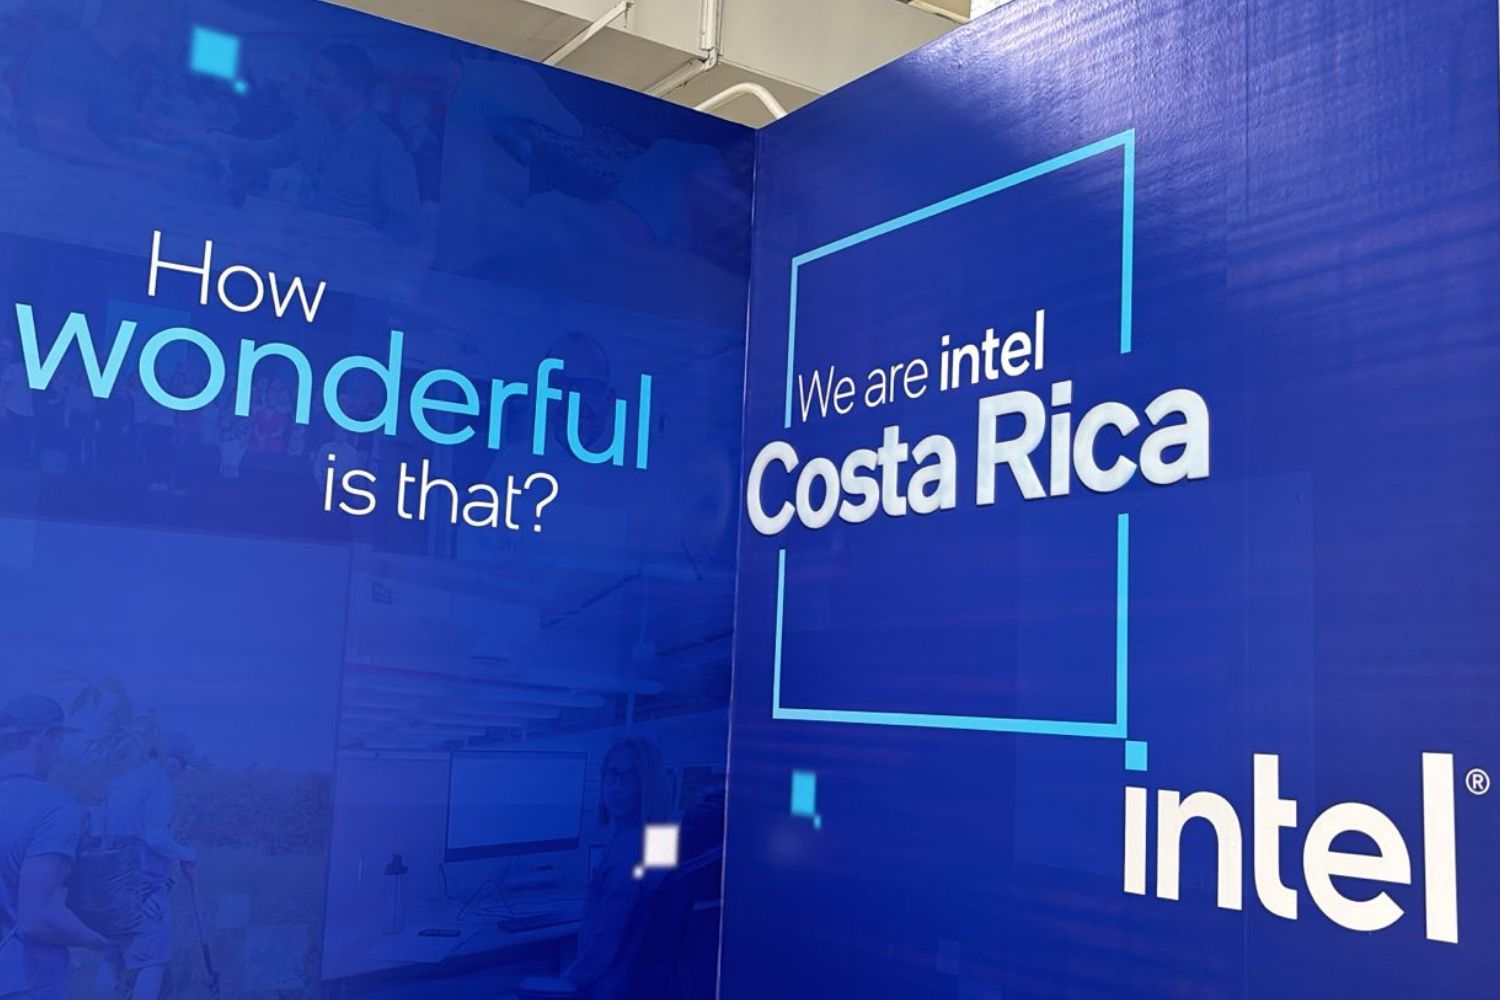 Intel Costa Rica